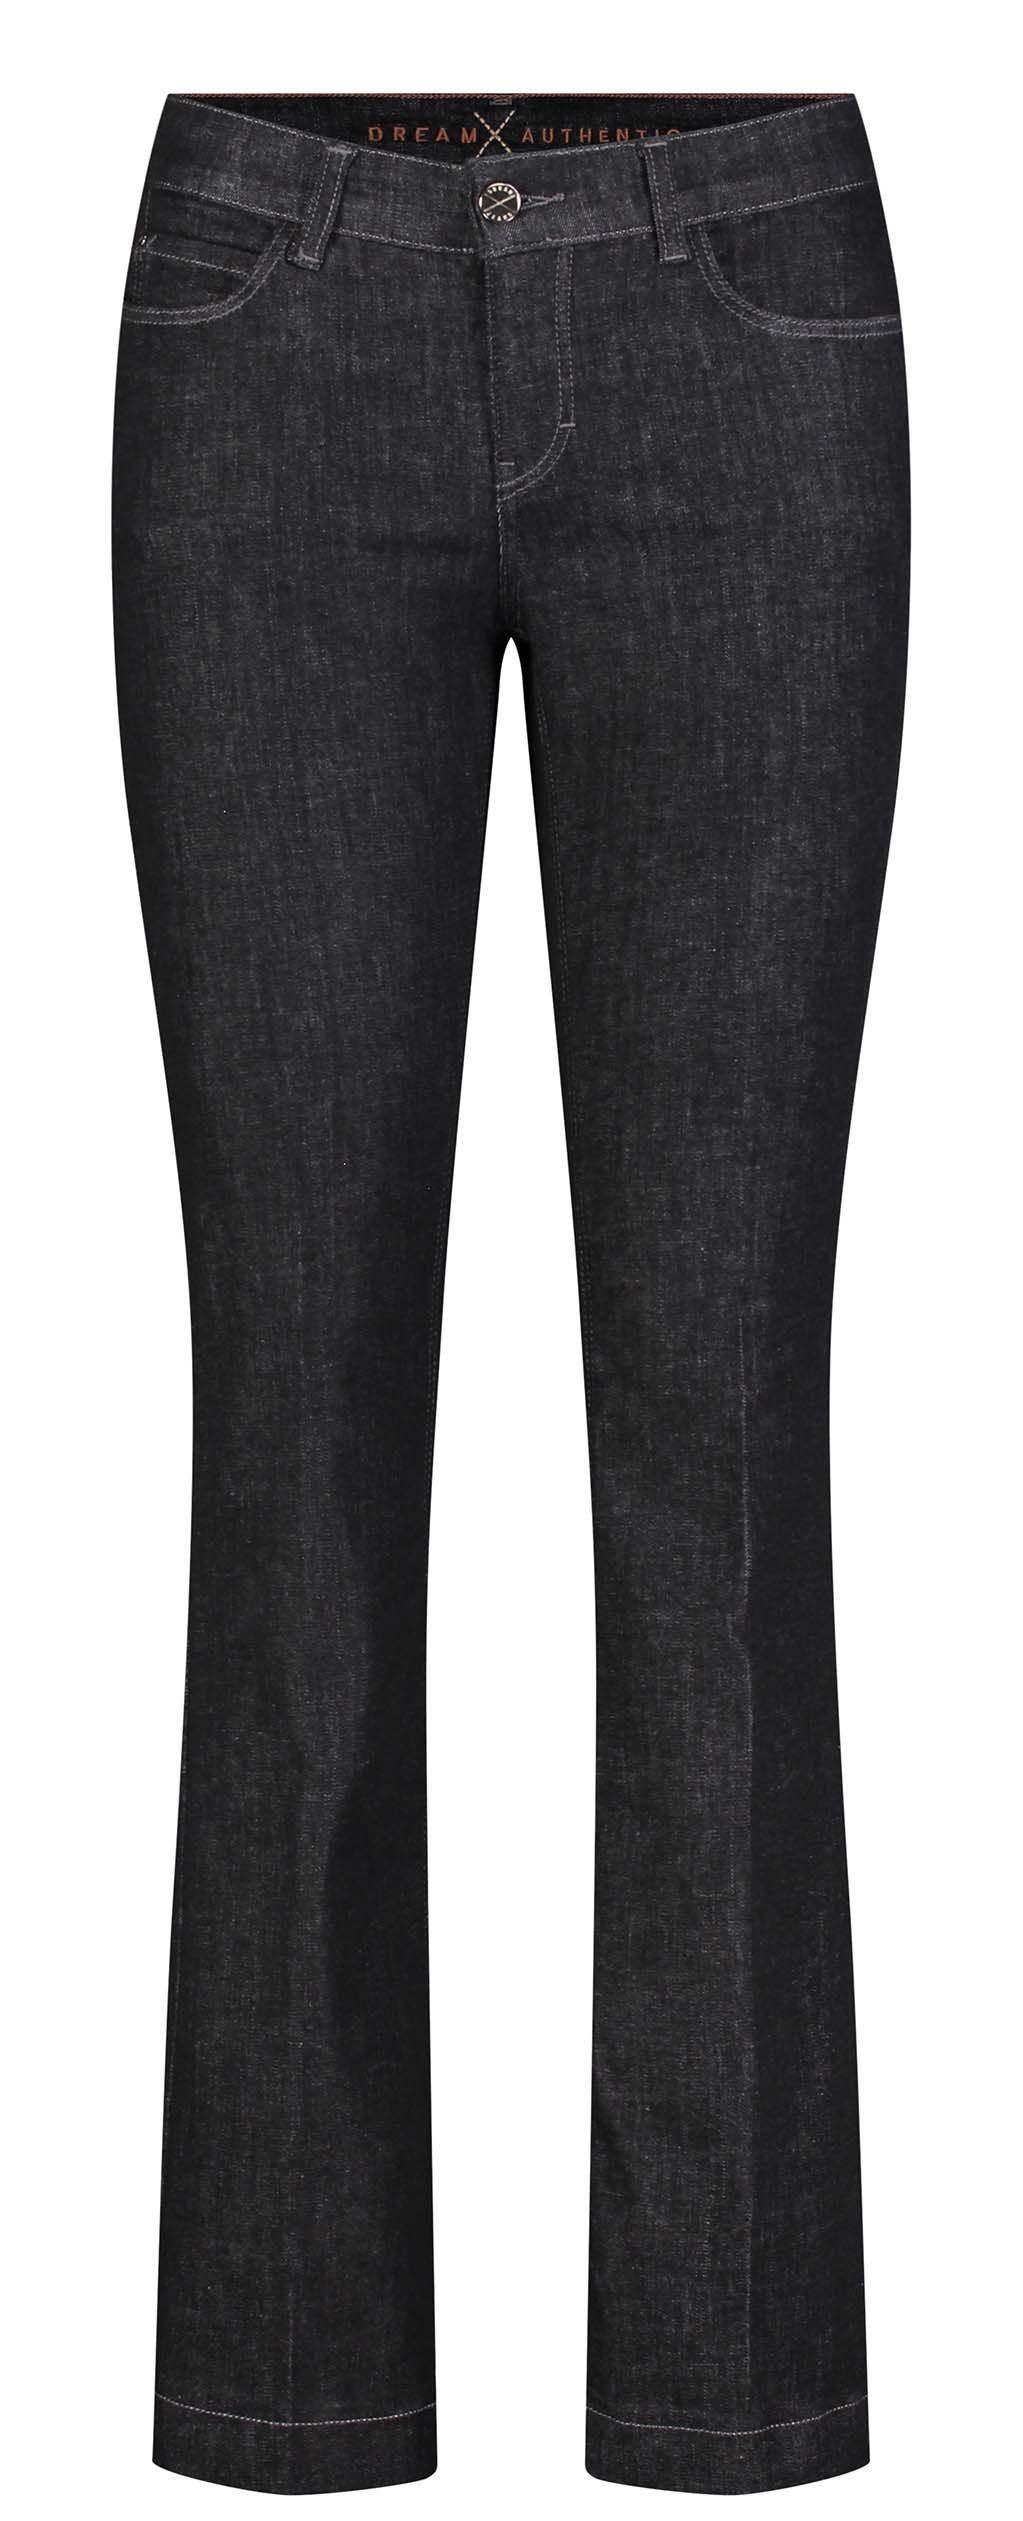 fashion DREAM Stretch-Jeans black MAC BOOT MAC rinsed 5429-90-0357 D944